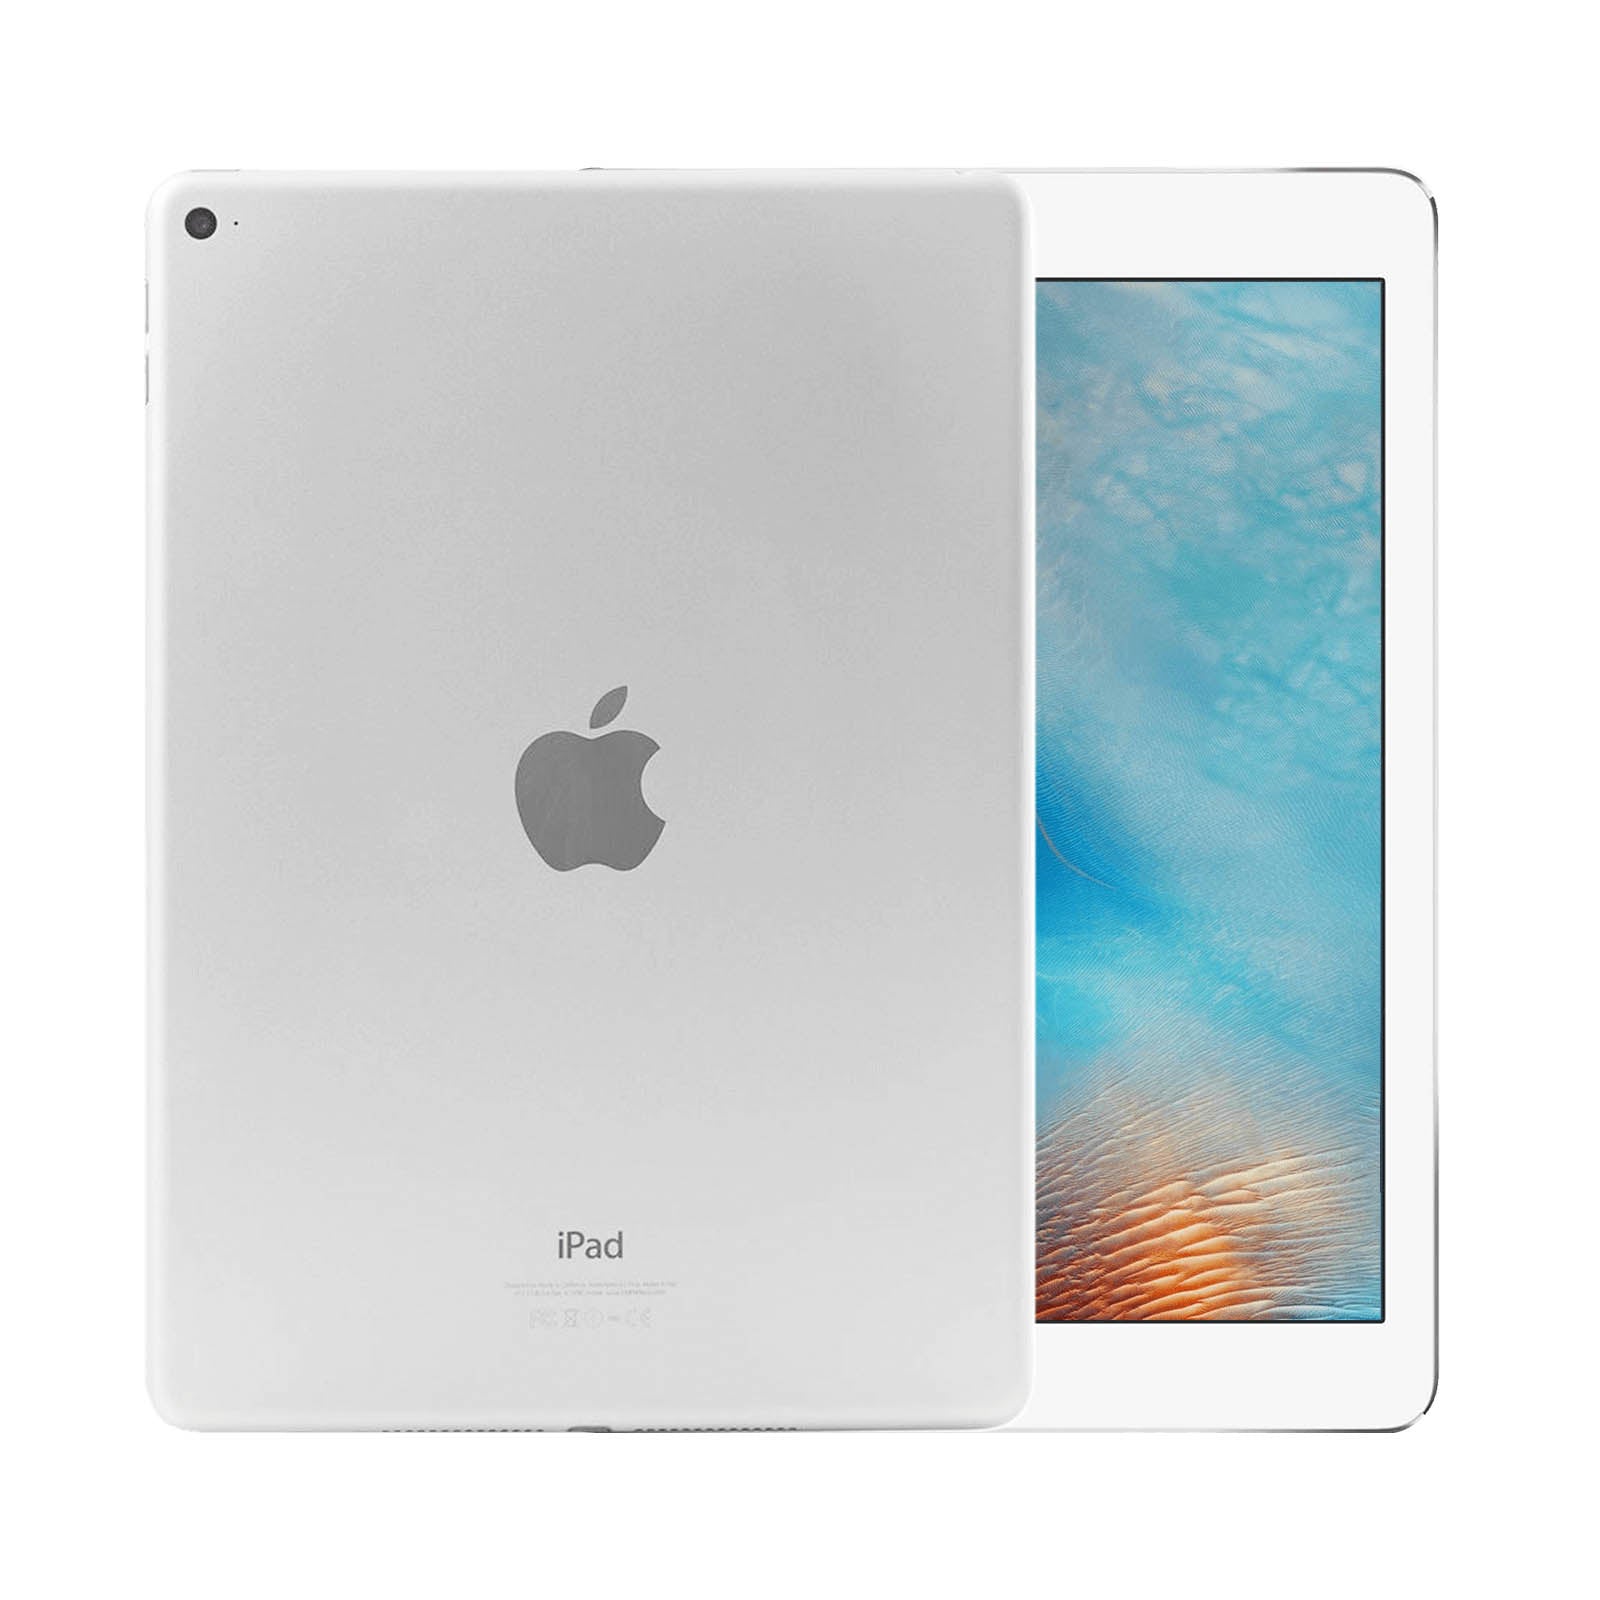 Apple iPad Air 2 128GB Silver Good - WiFi